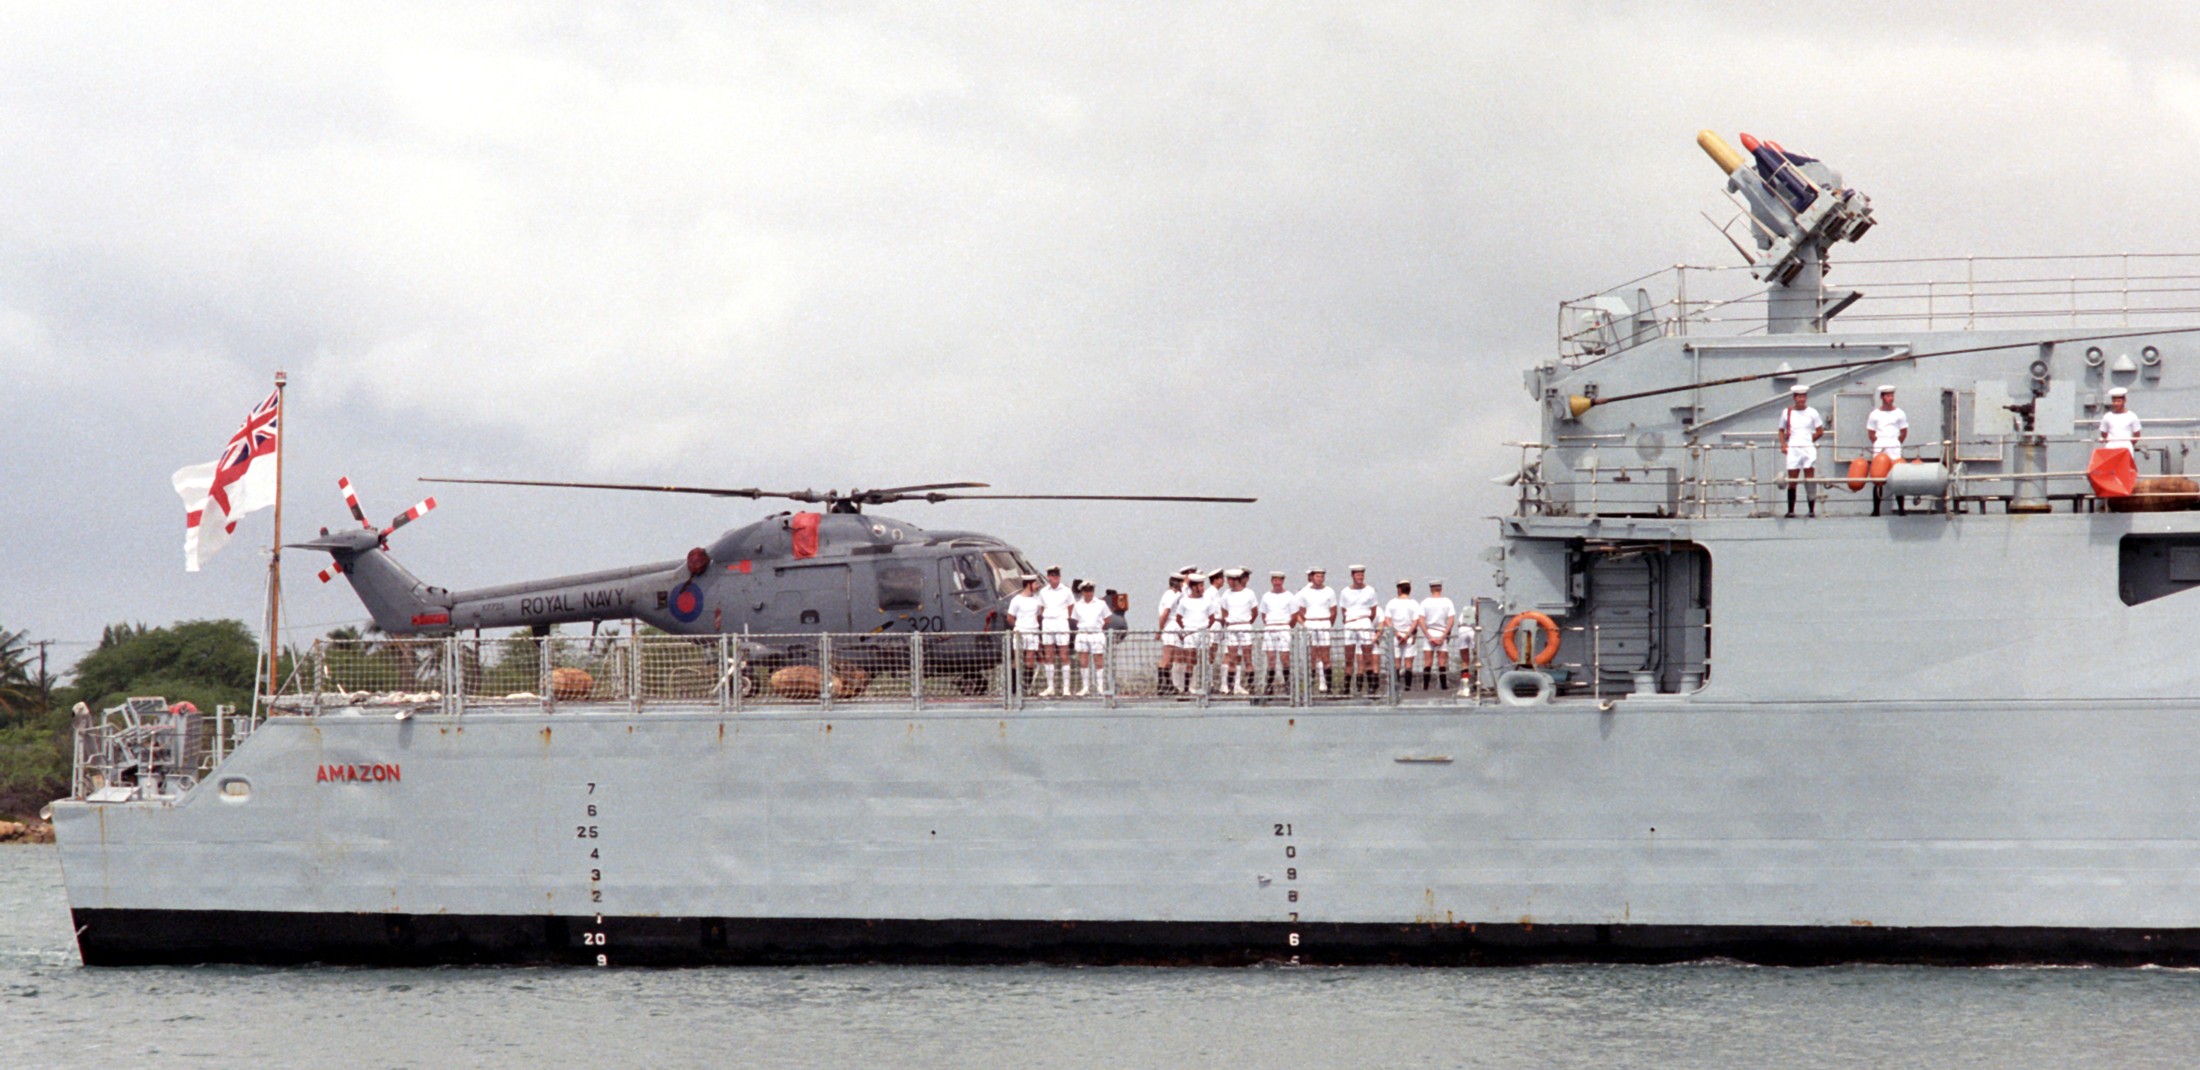 hms amazon f 169 class frigate flight deck hangar lynx helicopter